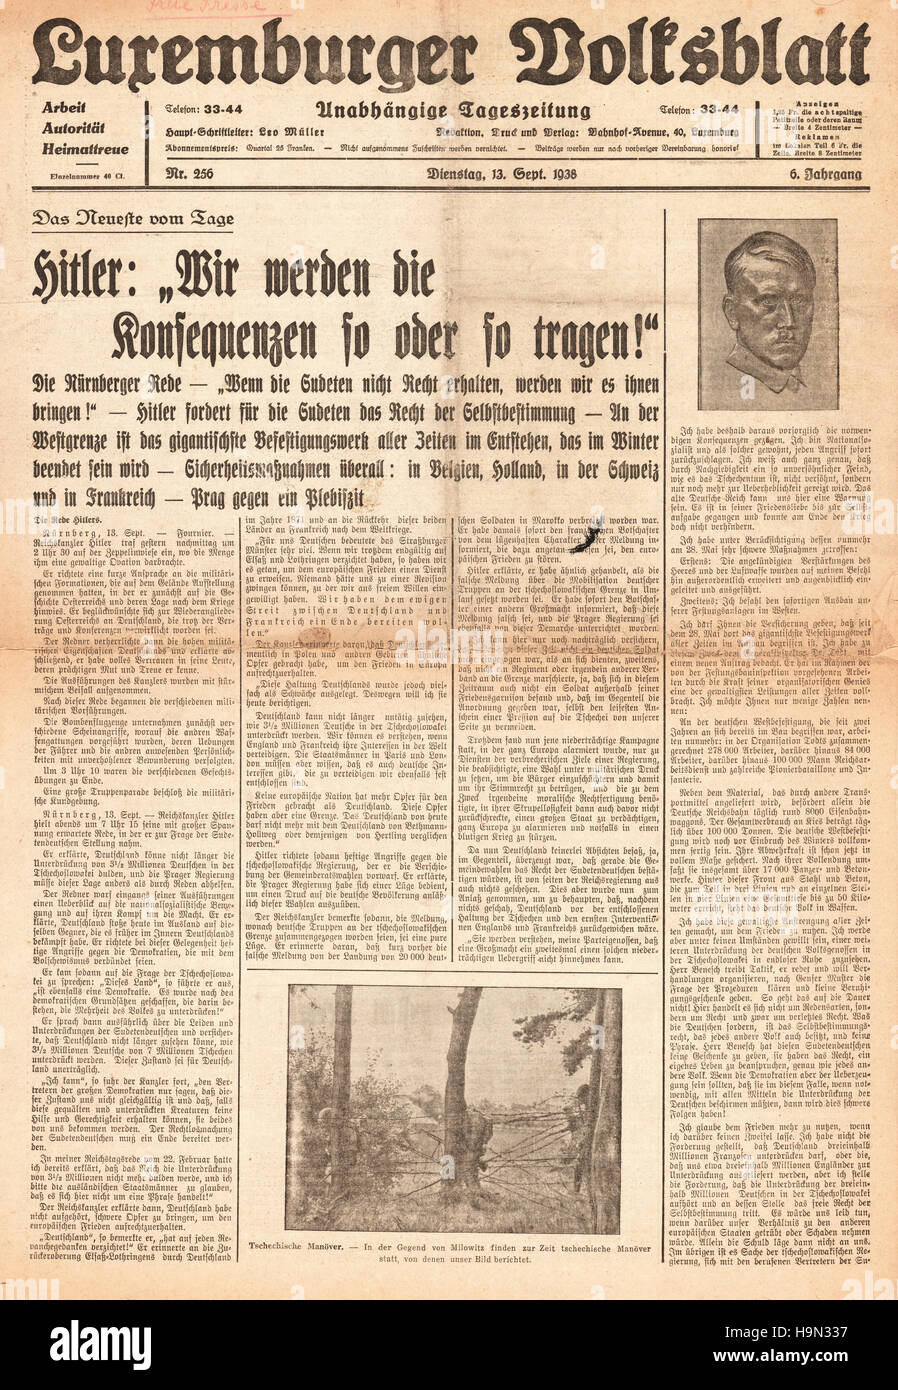 1938 Luxemburger Volksblatt front page Adolf Hitler speech in Nuremburg Stock Photo